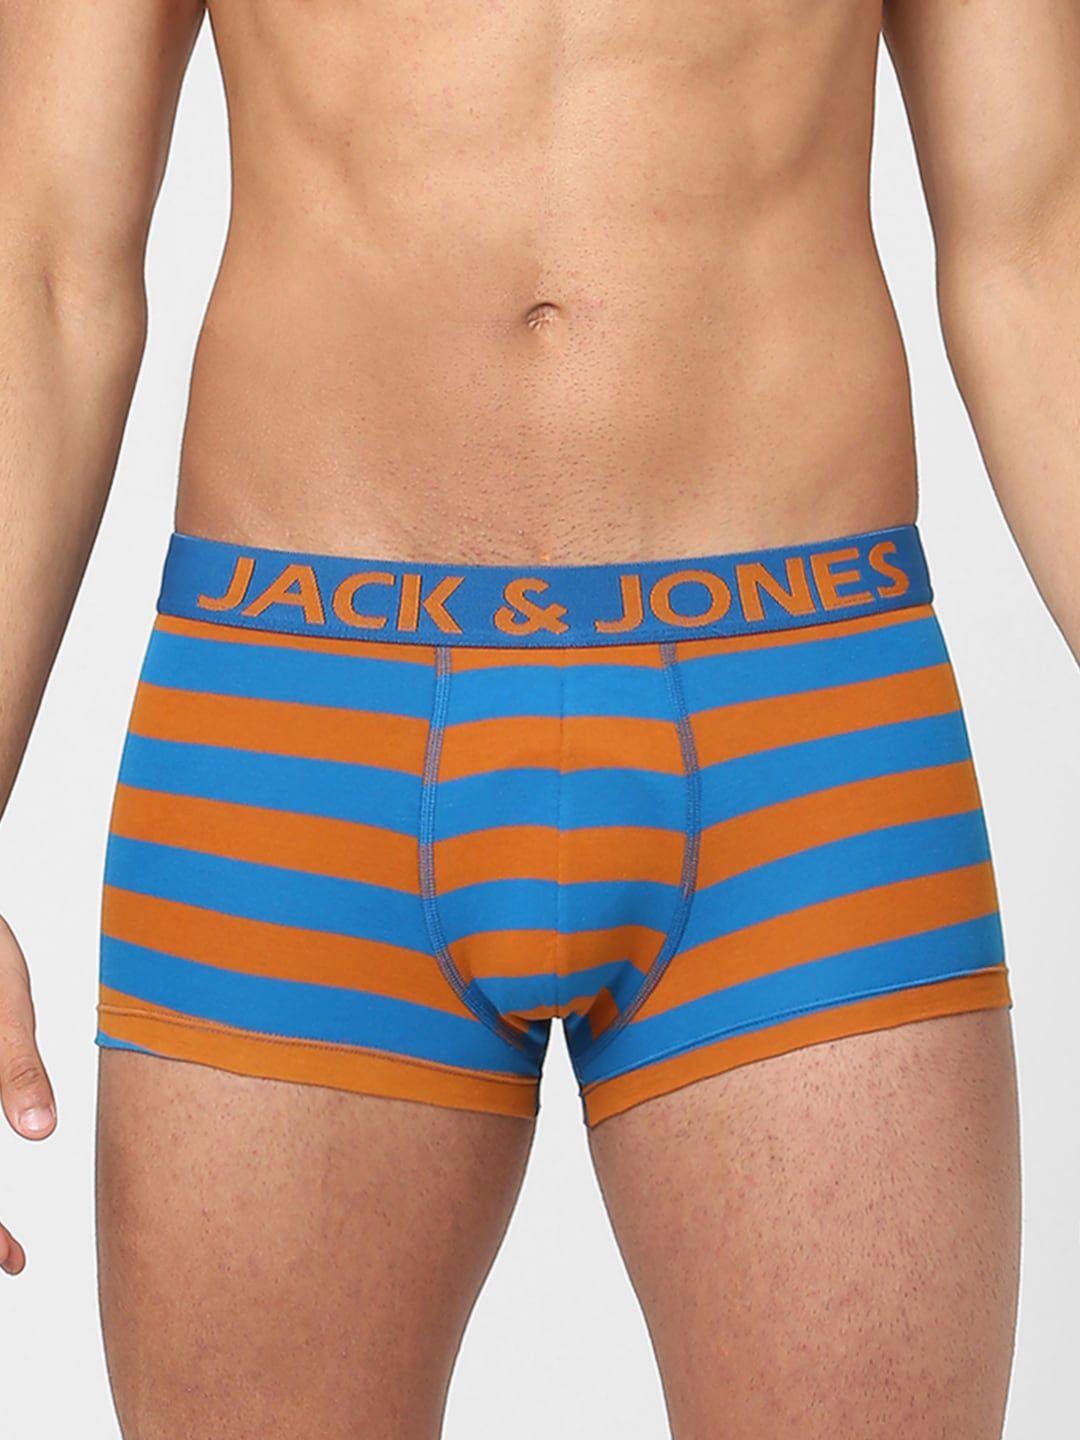 jack & jones men orange & blue striped trunks 253537202